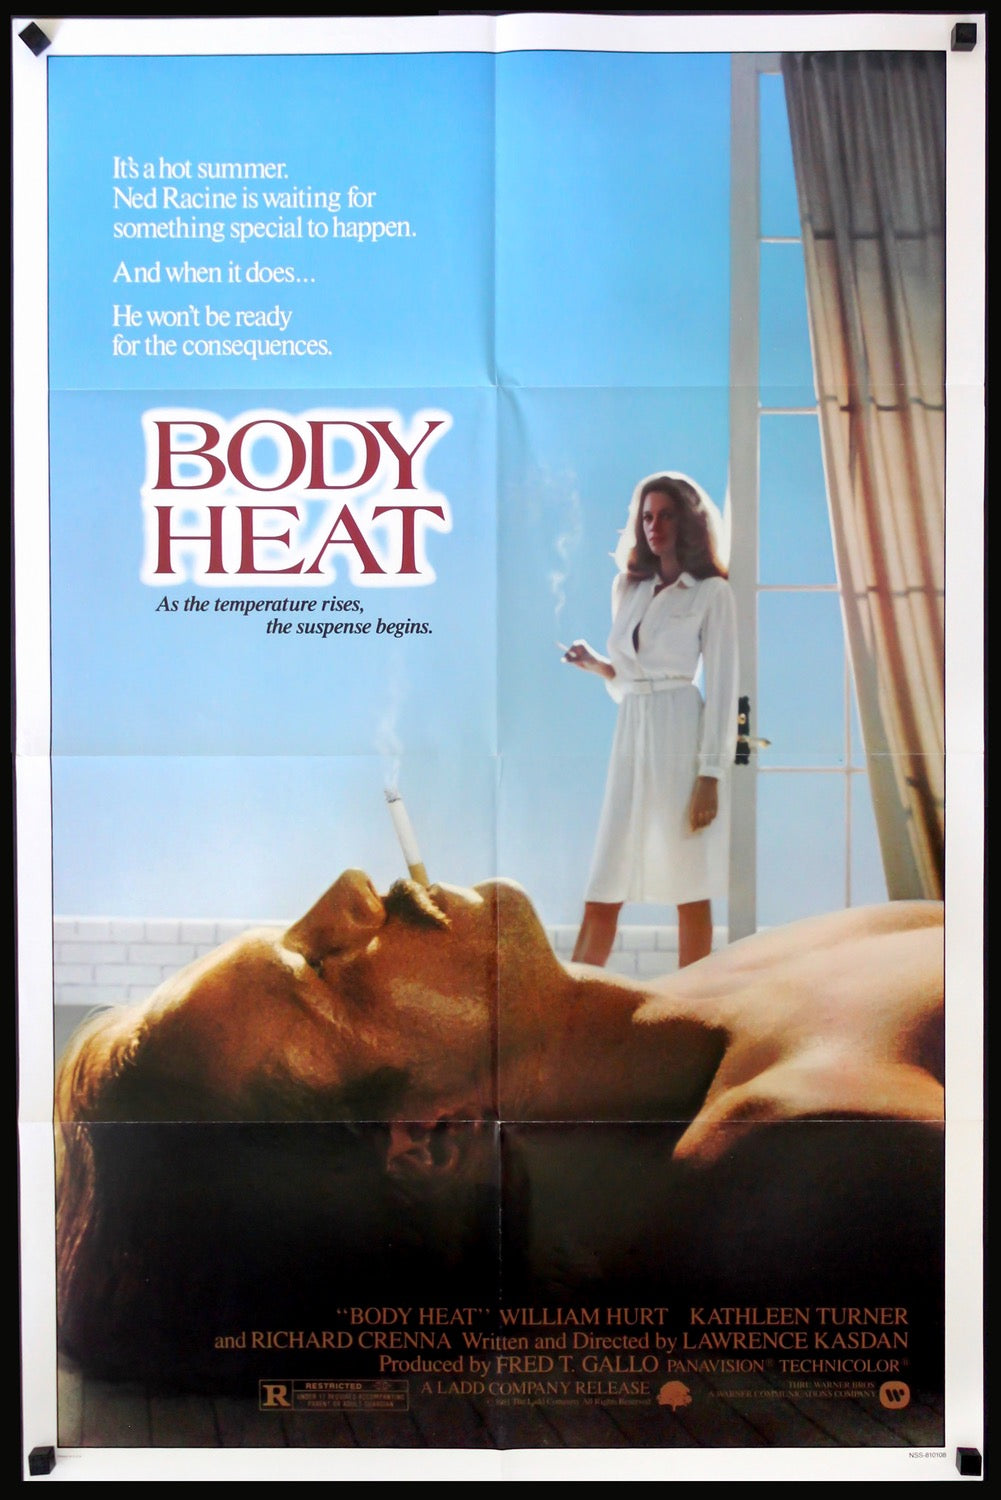 Body Heat (1981) original movie poster for sale at Original Film Art